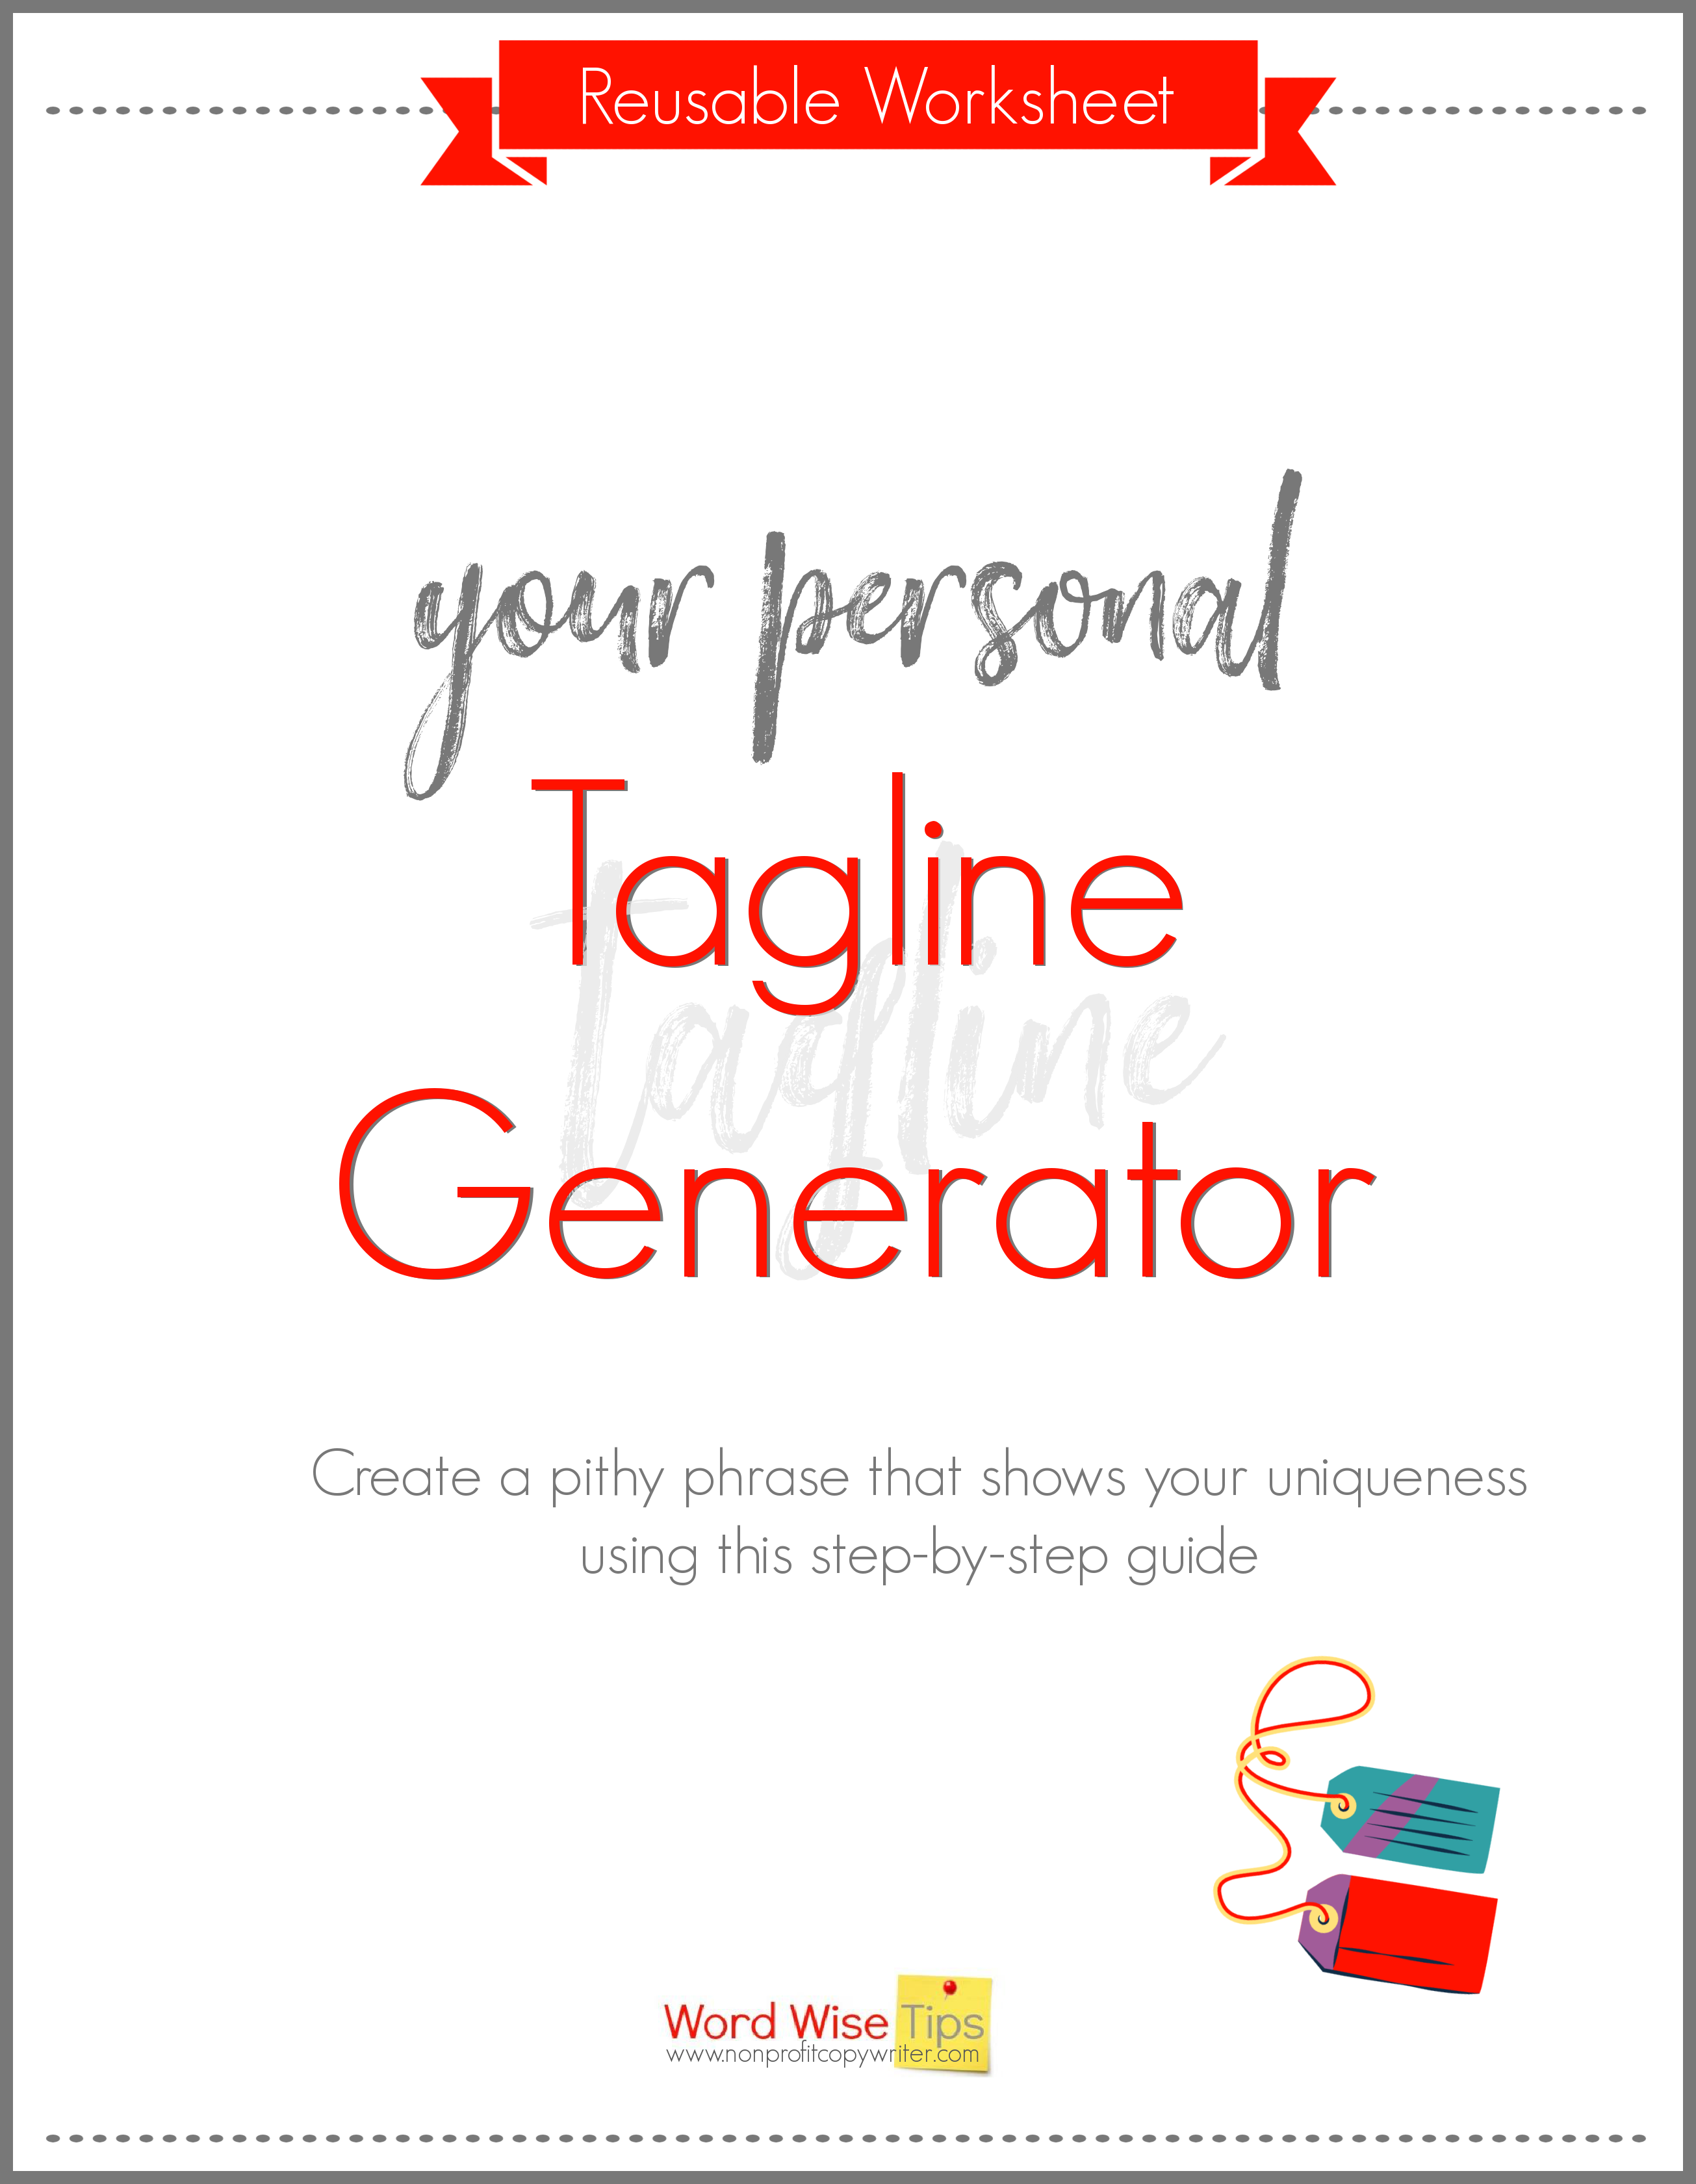 Your Tagline Generator cover